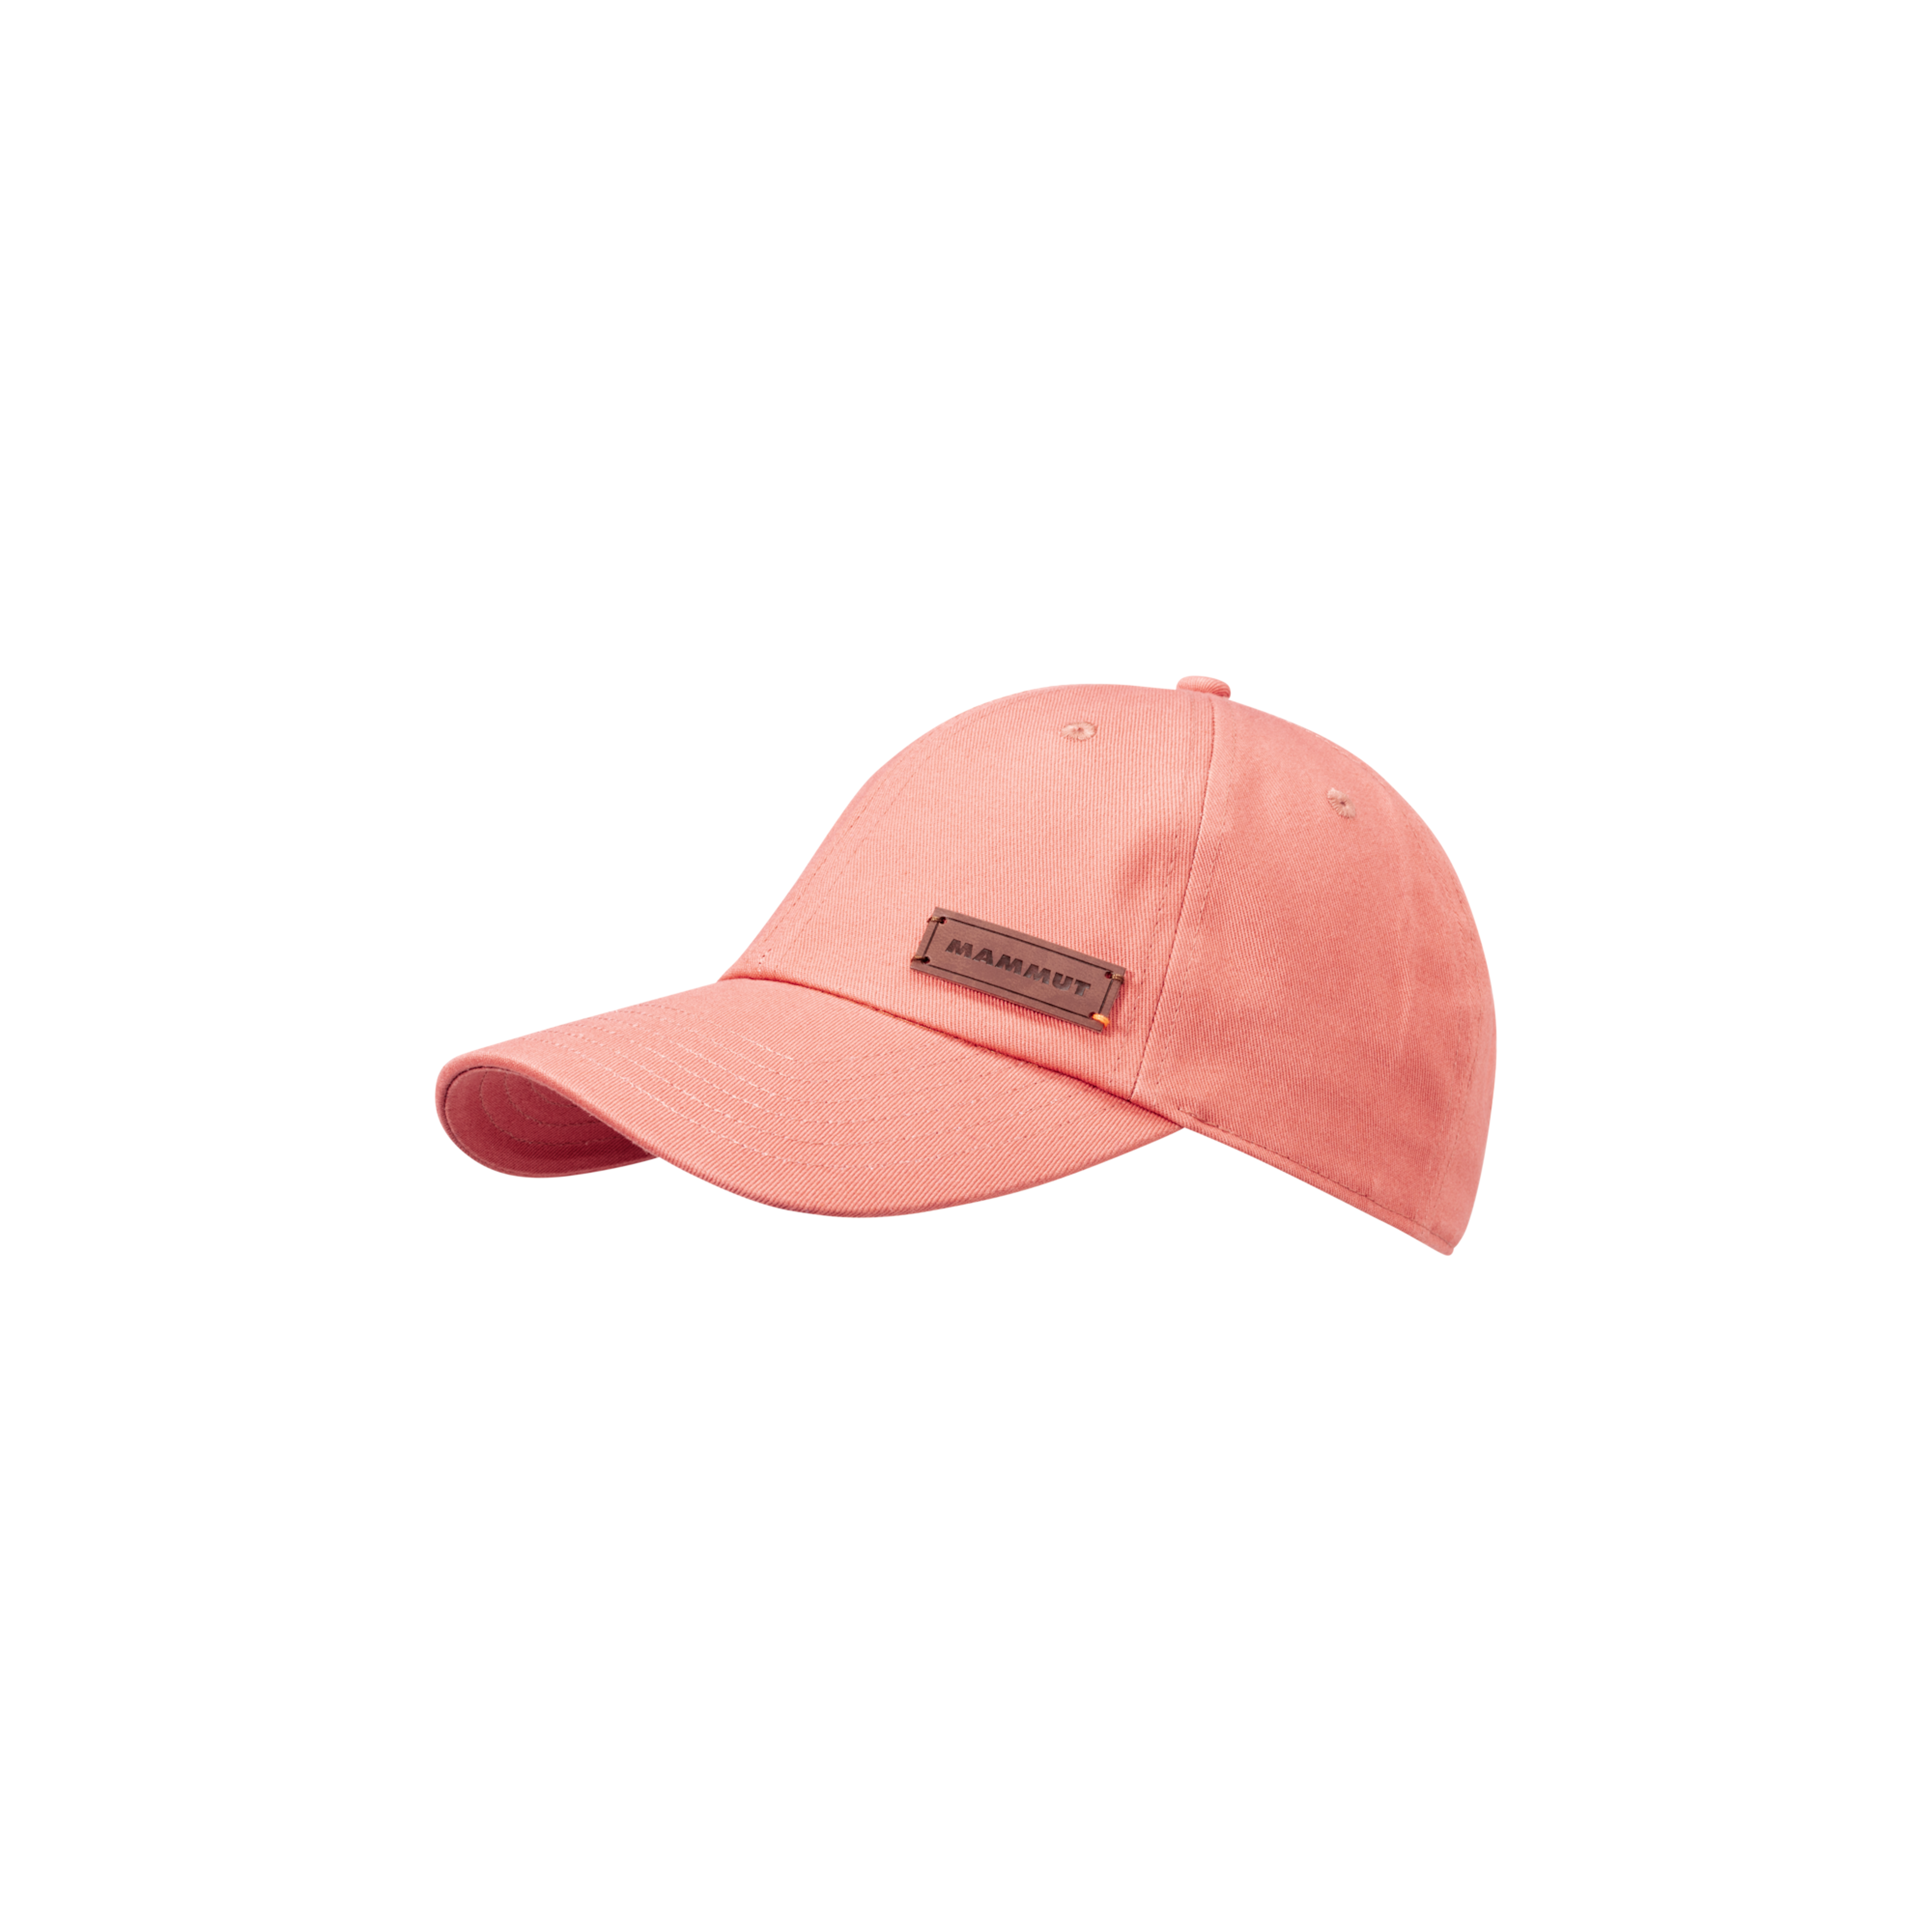 Girly pink mammut cap